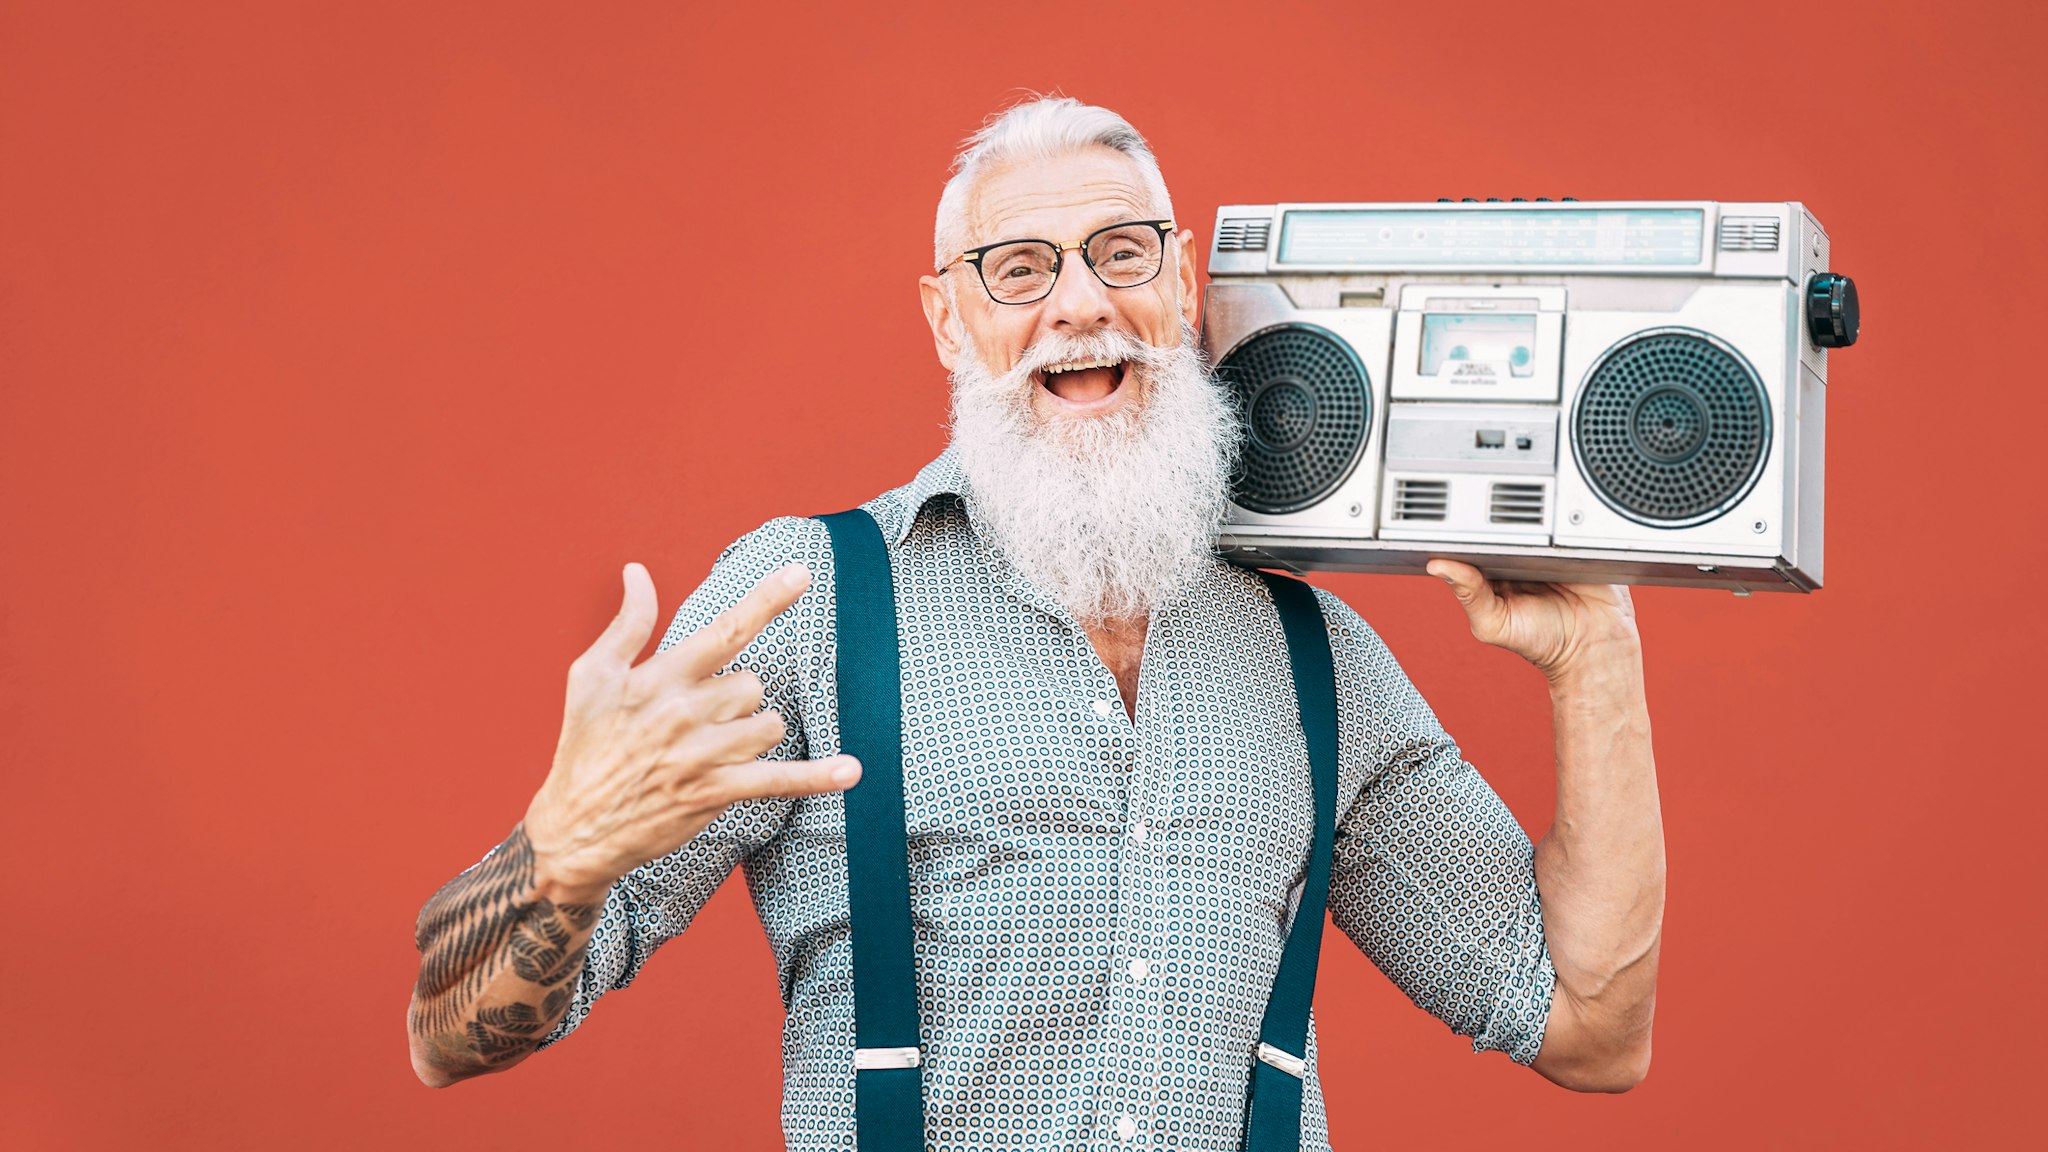 Hipster Senior Man Listening Music On Radio Against Red Background - stock photo